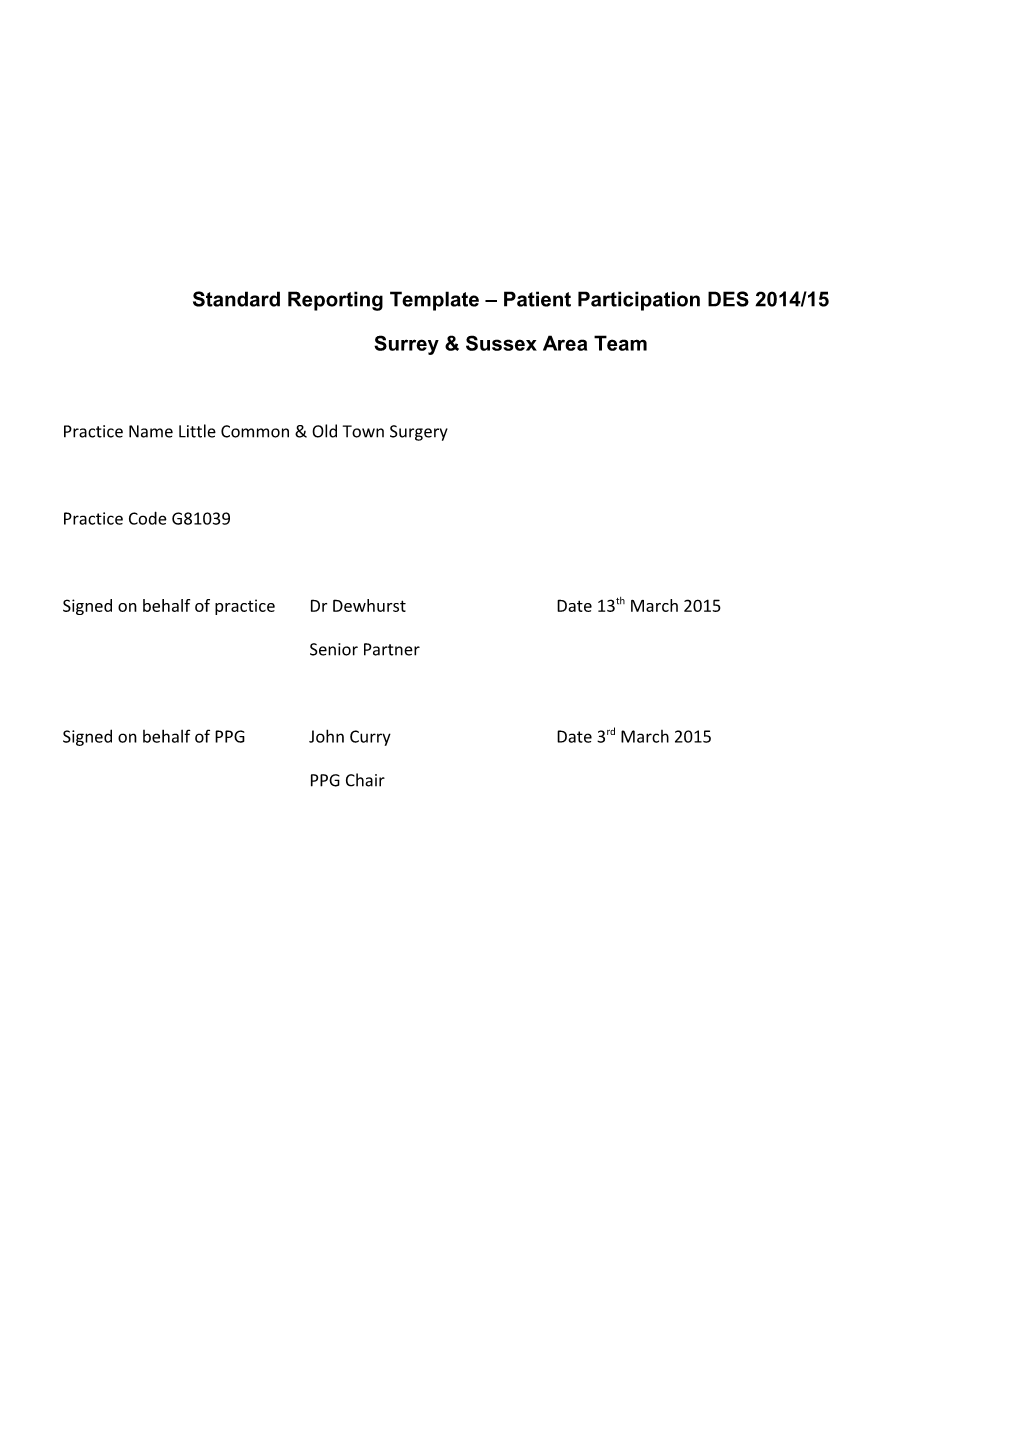 Standard Reporting Template Patient Participation DES 2014/15